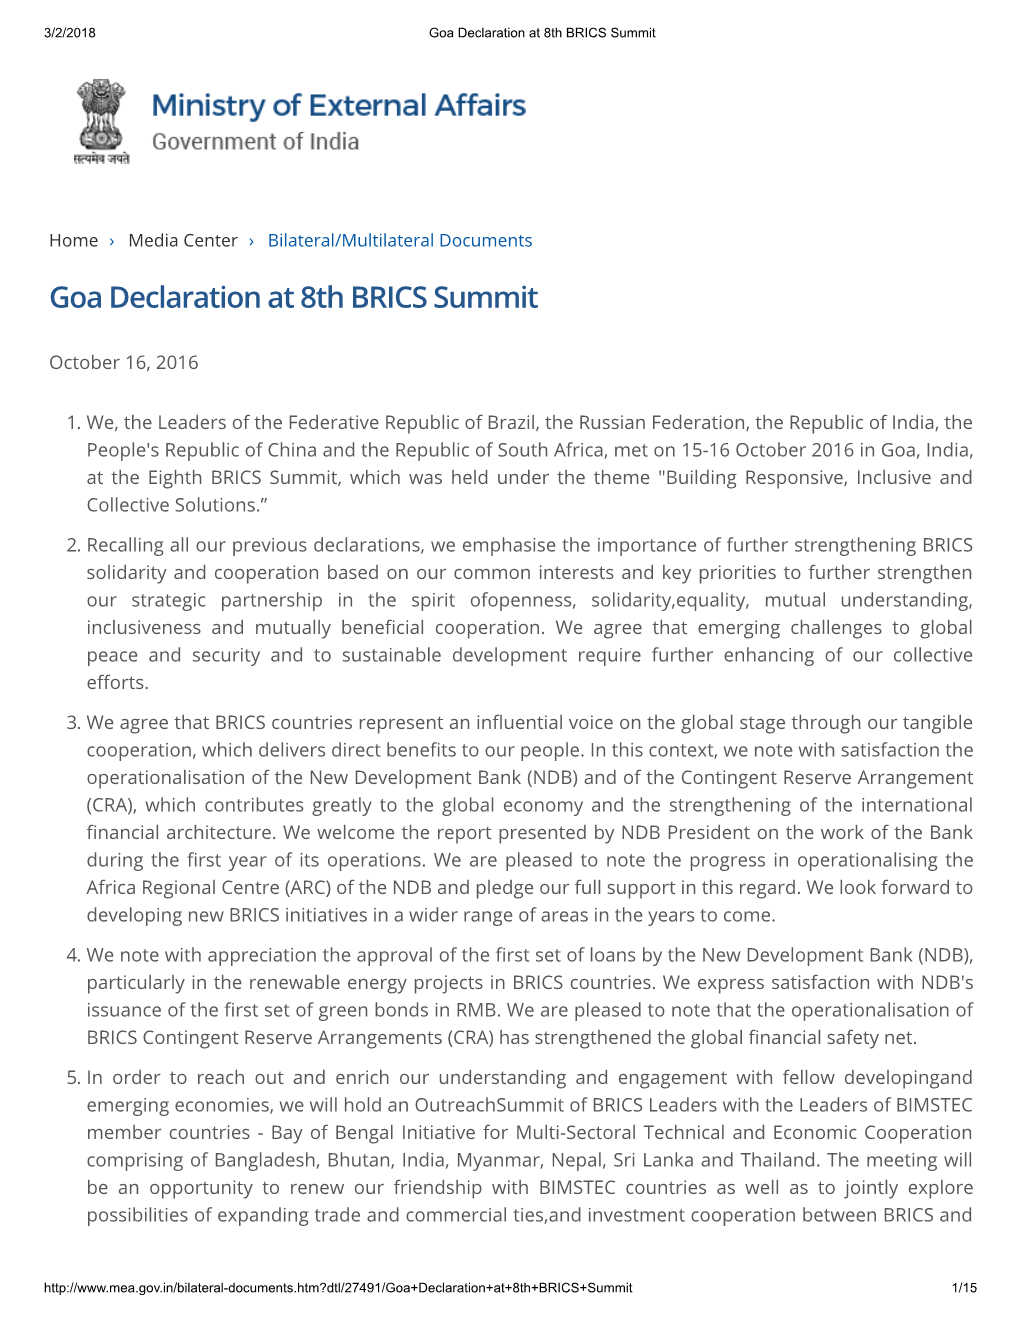 Goa Declaration at 8Th BRICS Summit